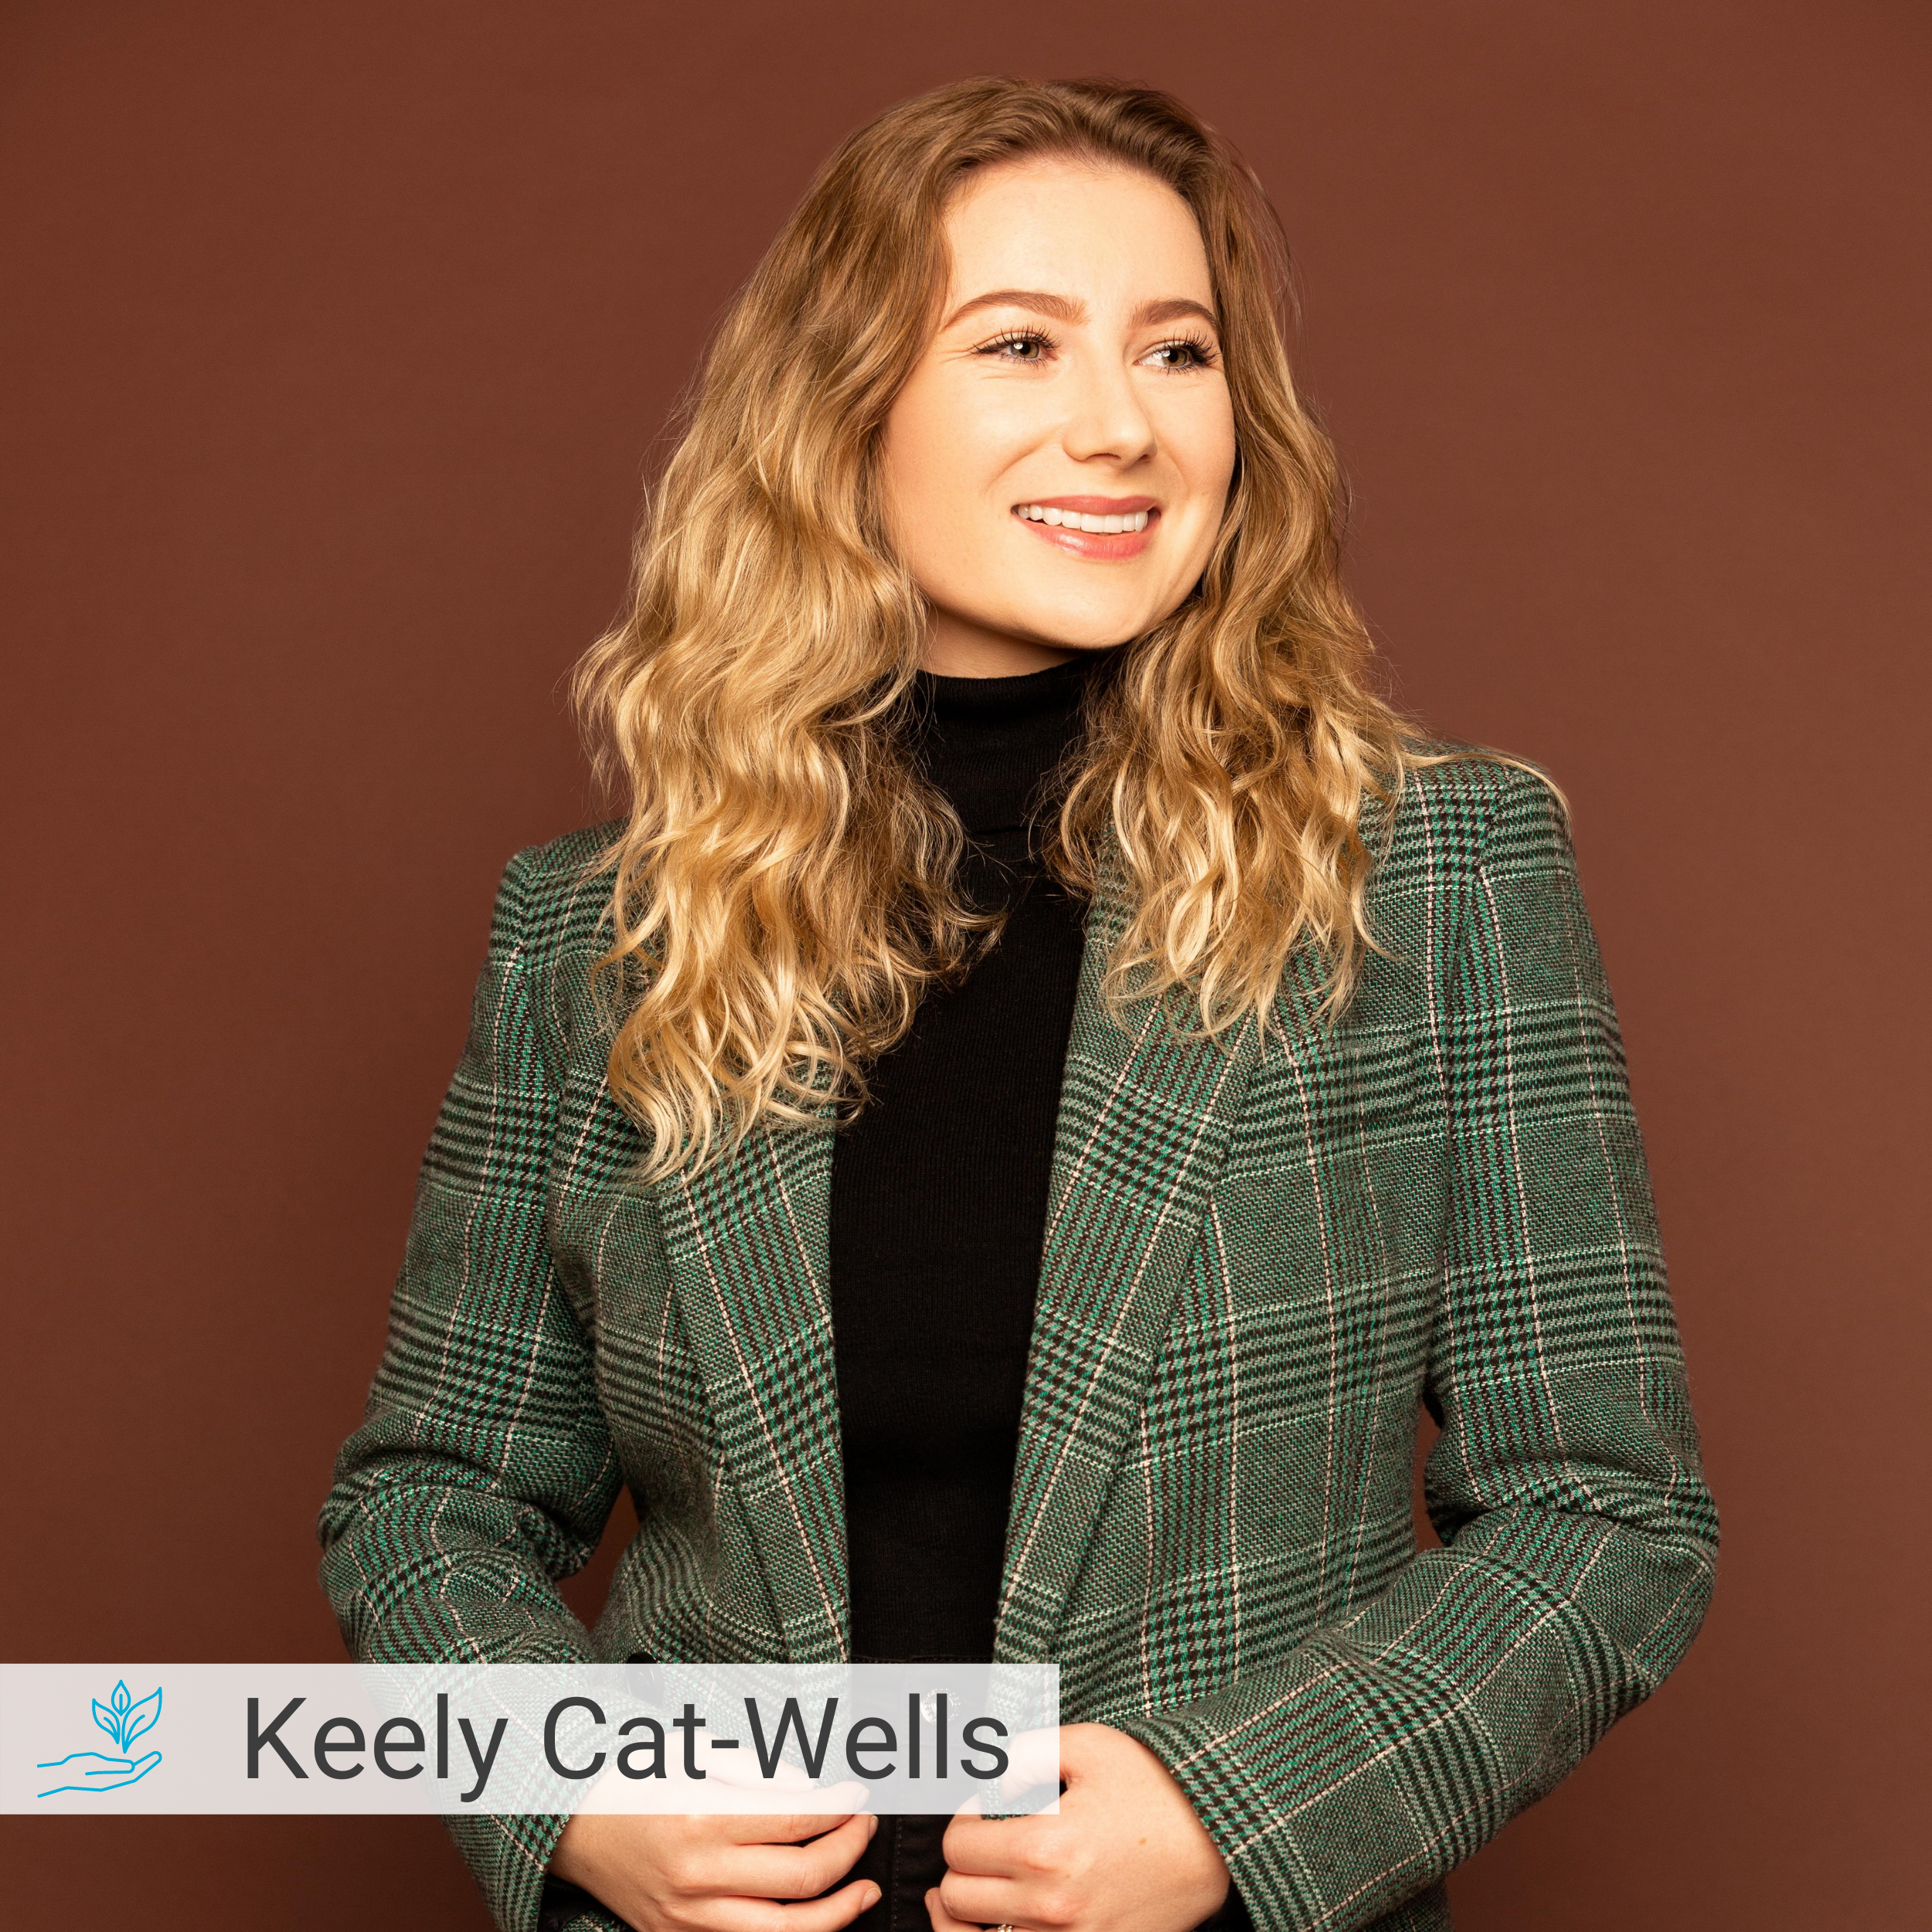 Image of Keely Catt-Wells